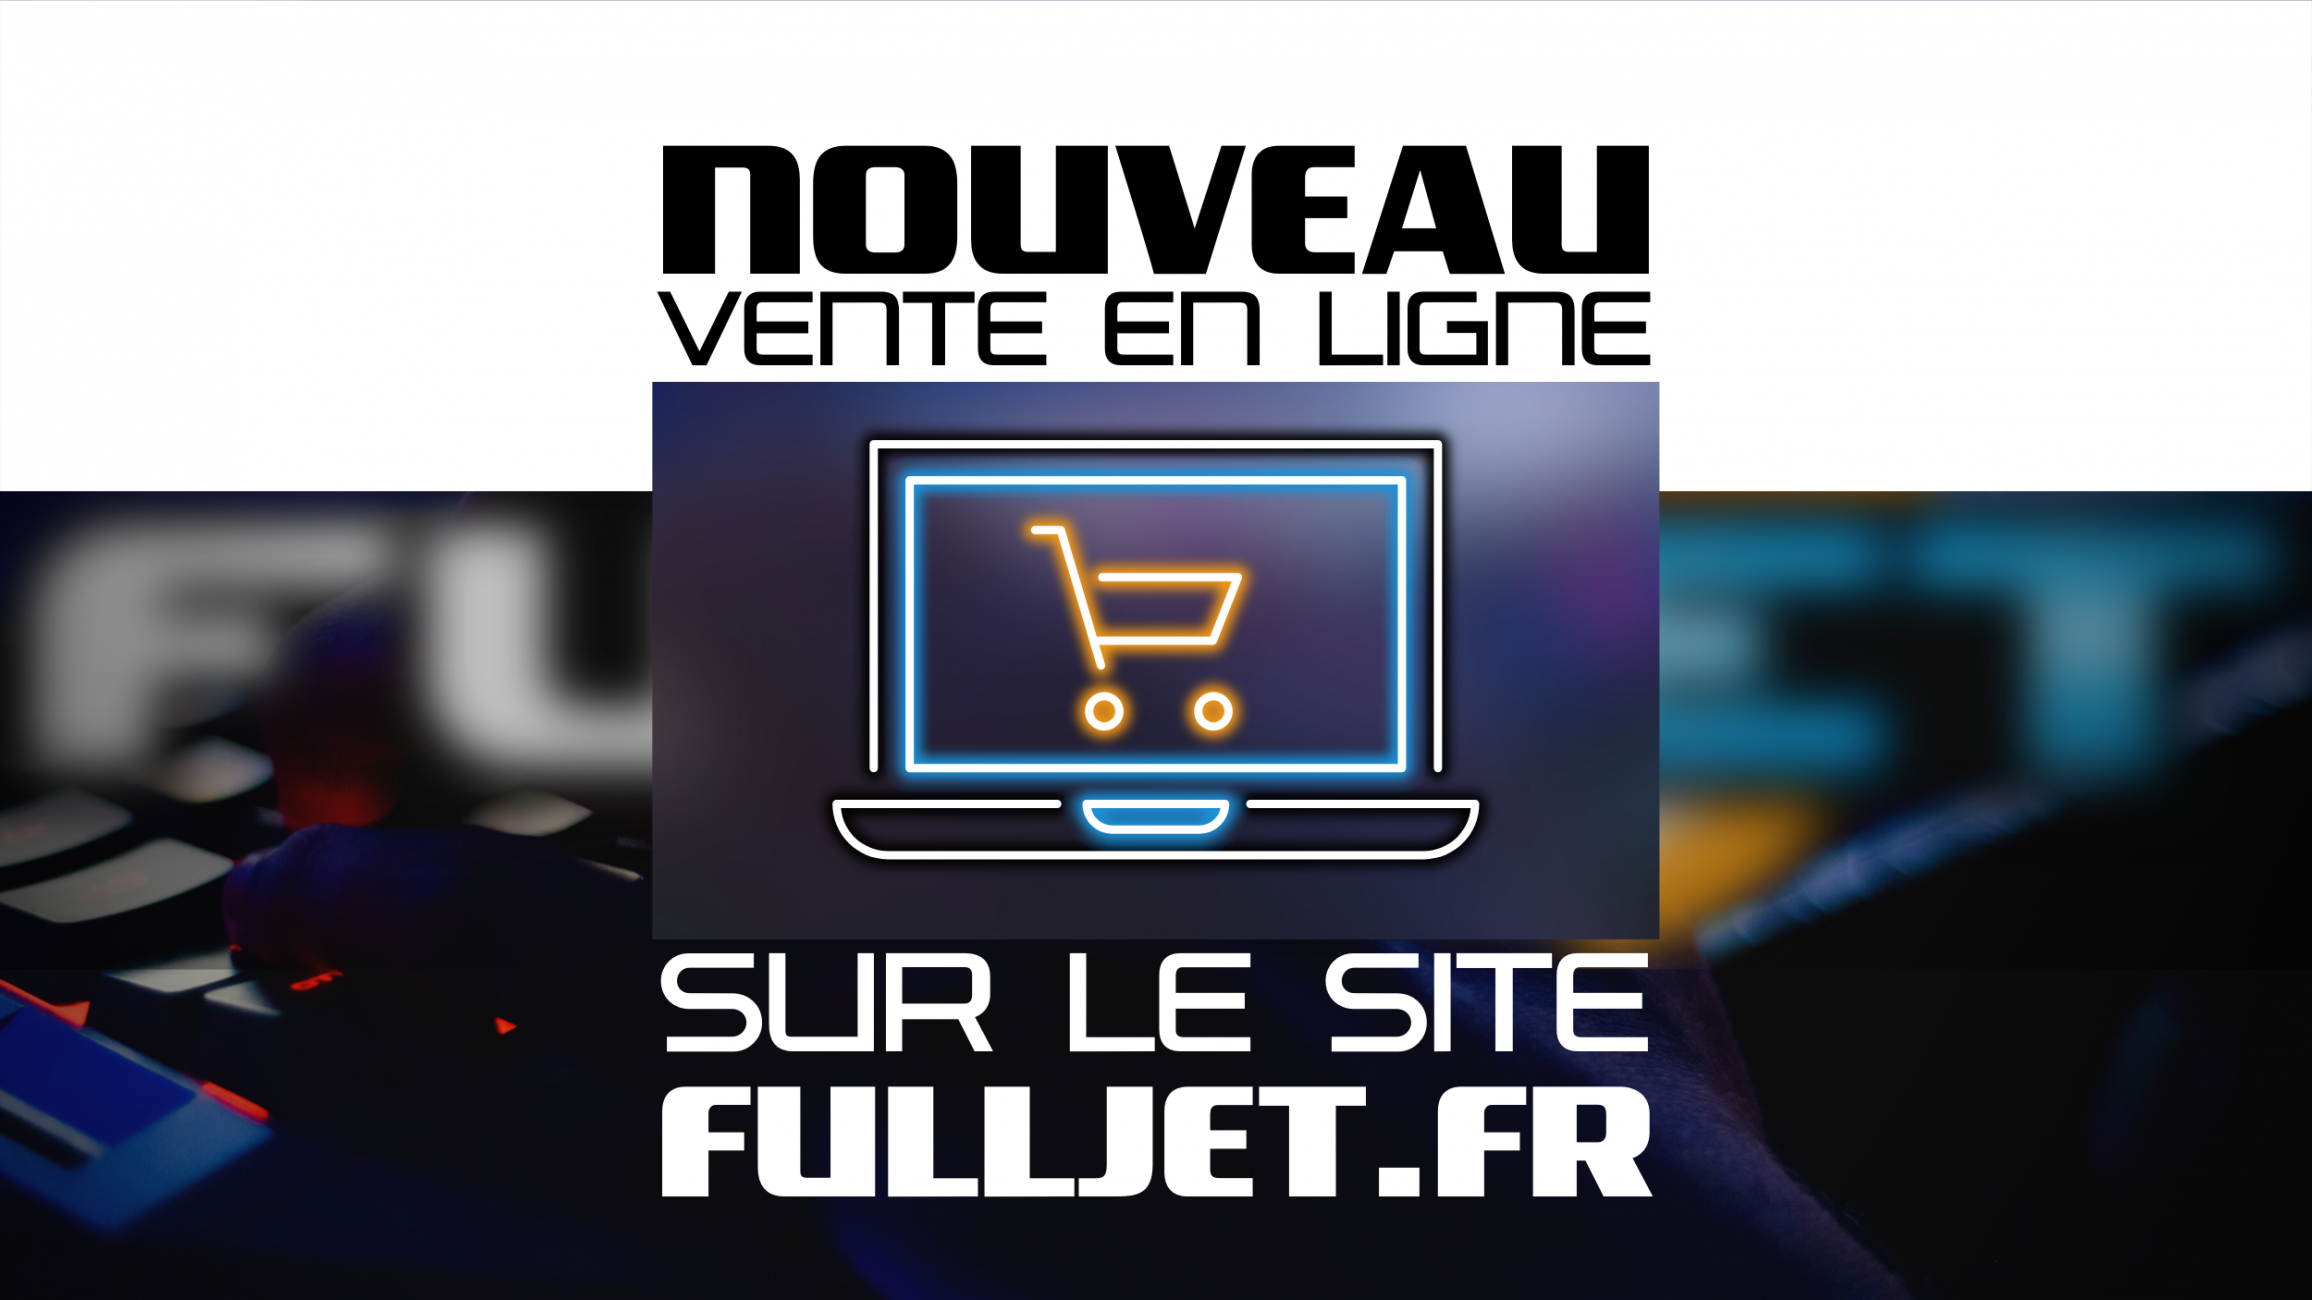 NEW: Shop online